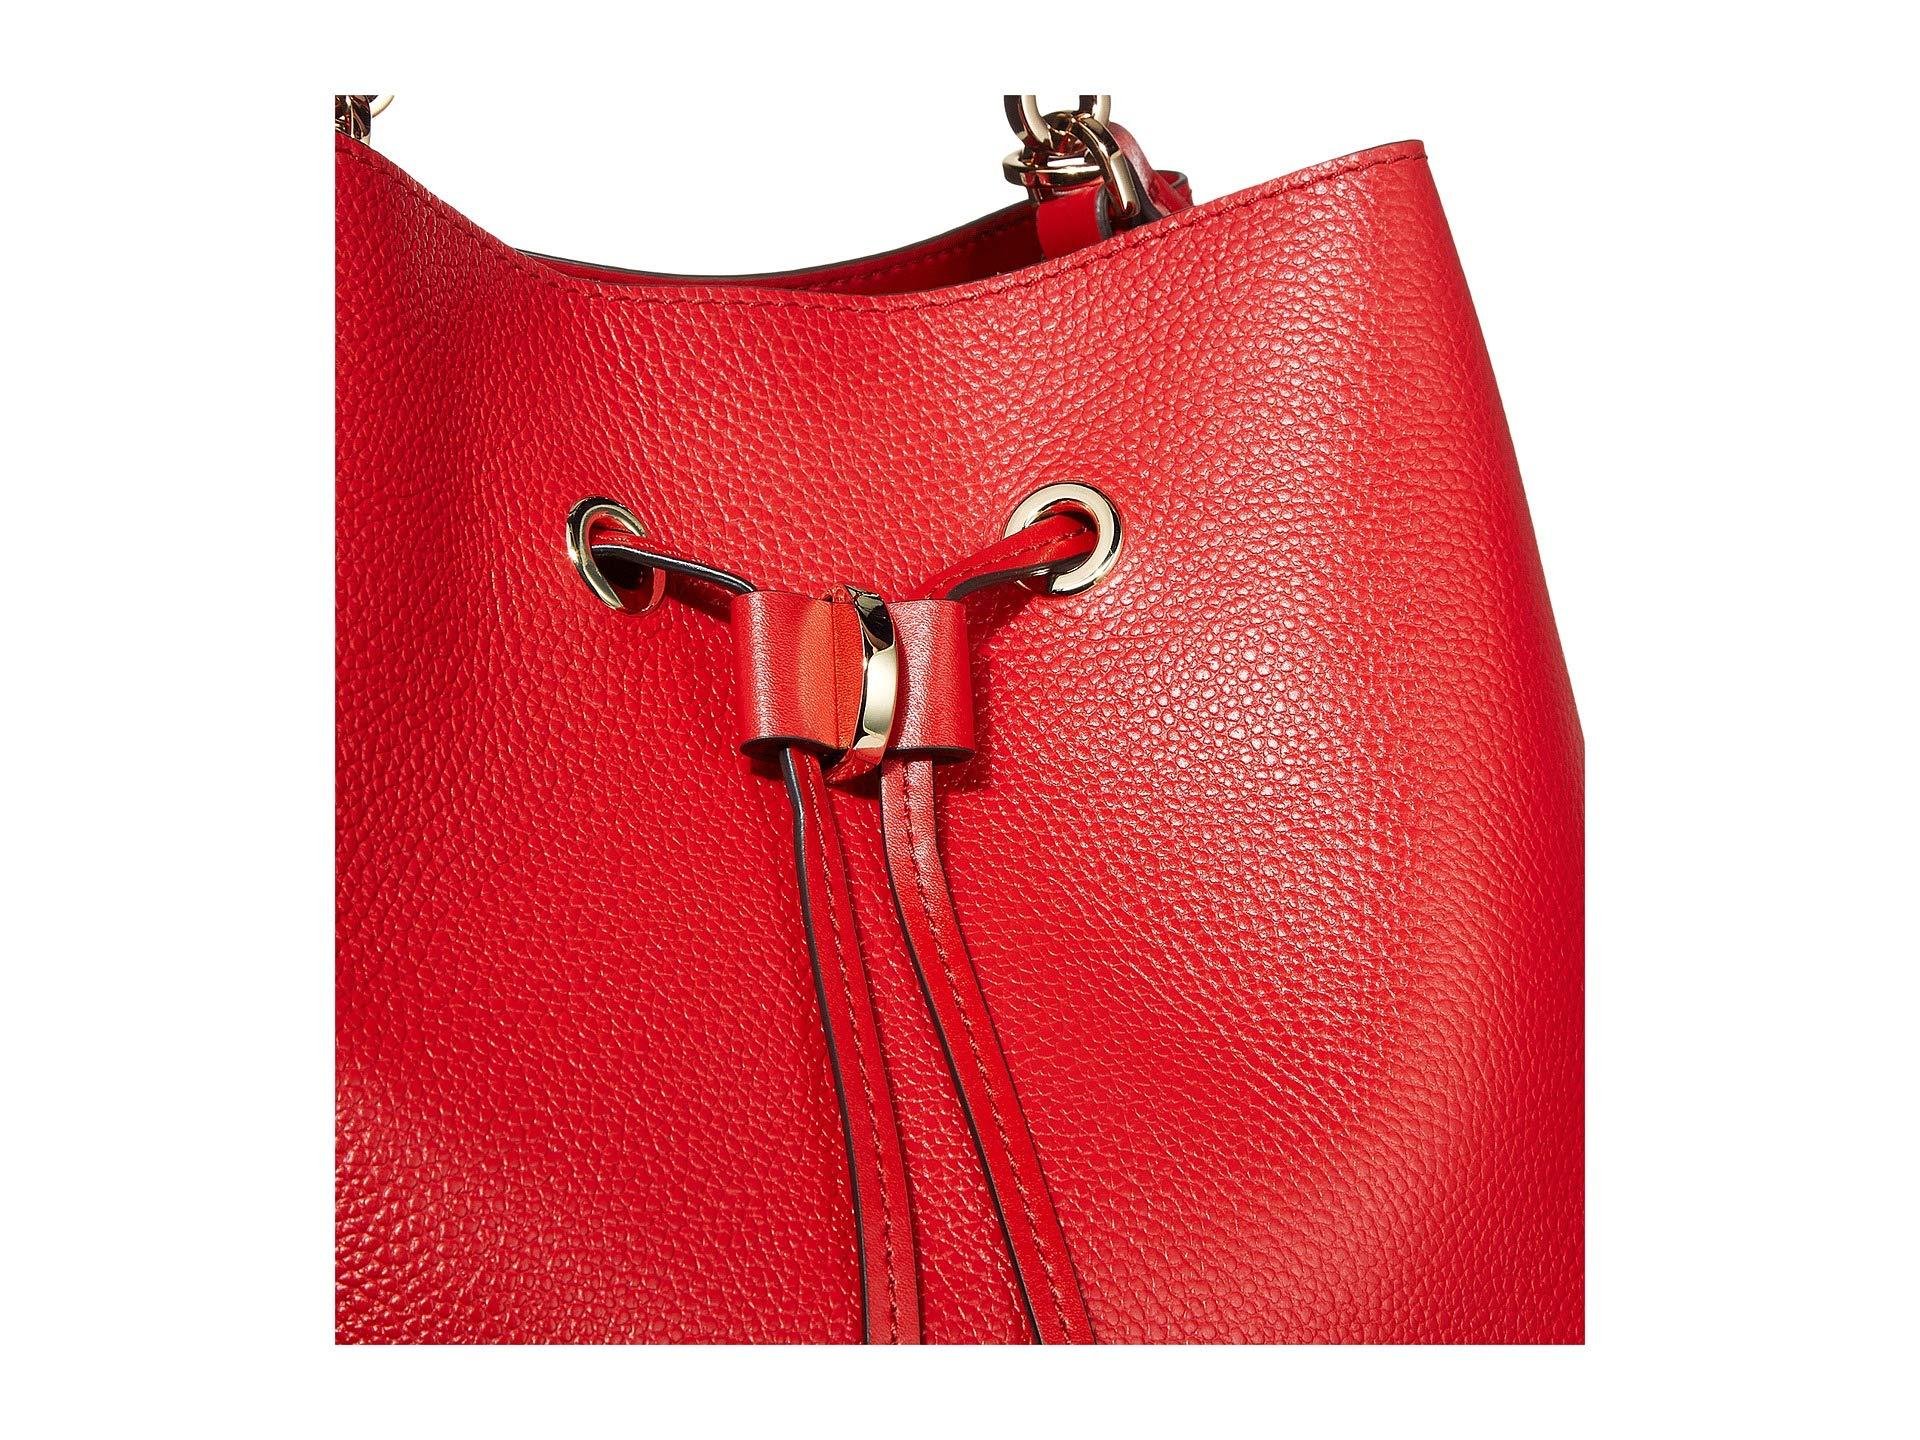 Michael Kors Mercer Gallery Convertible Leather Medium Bag